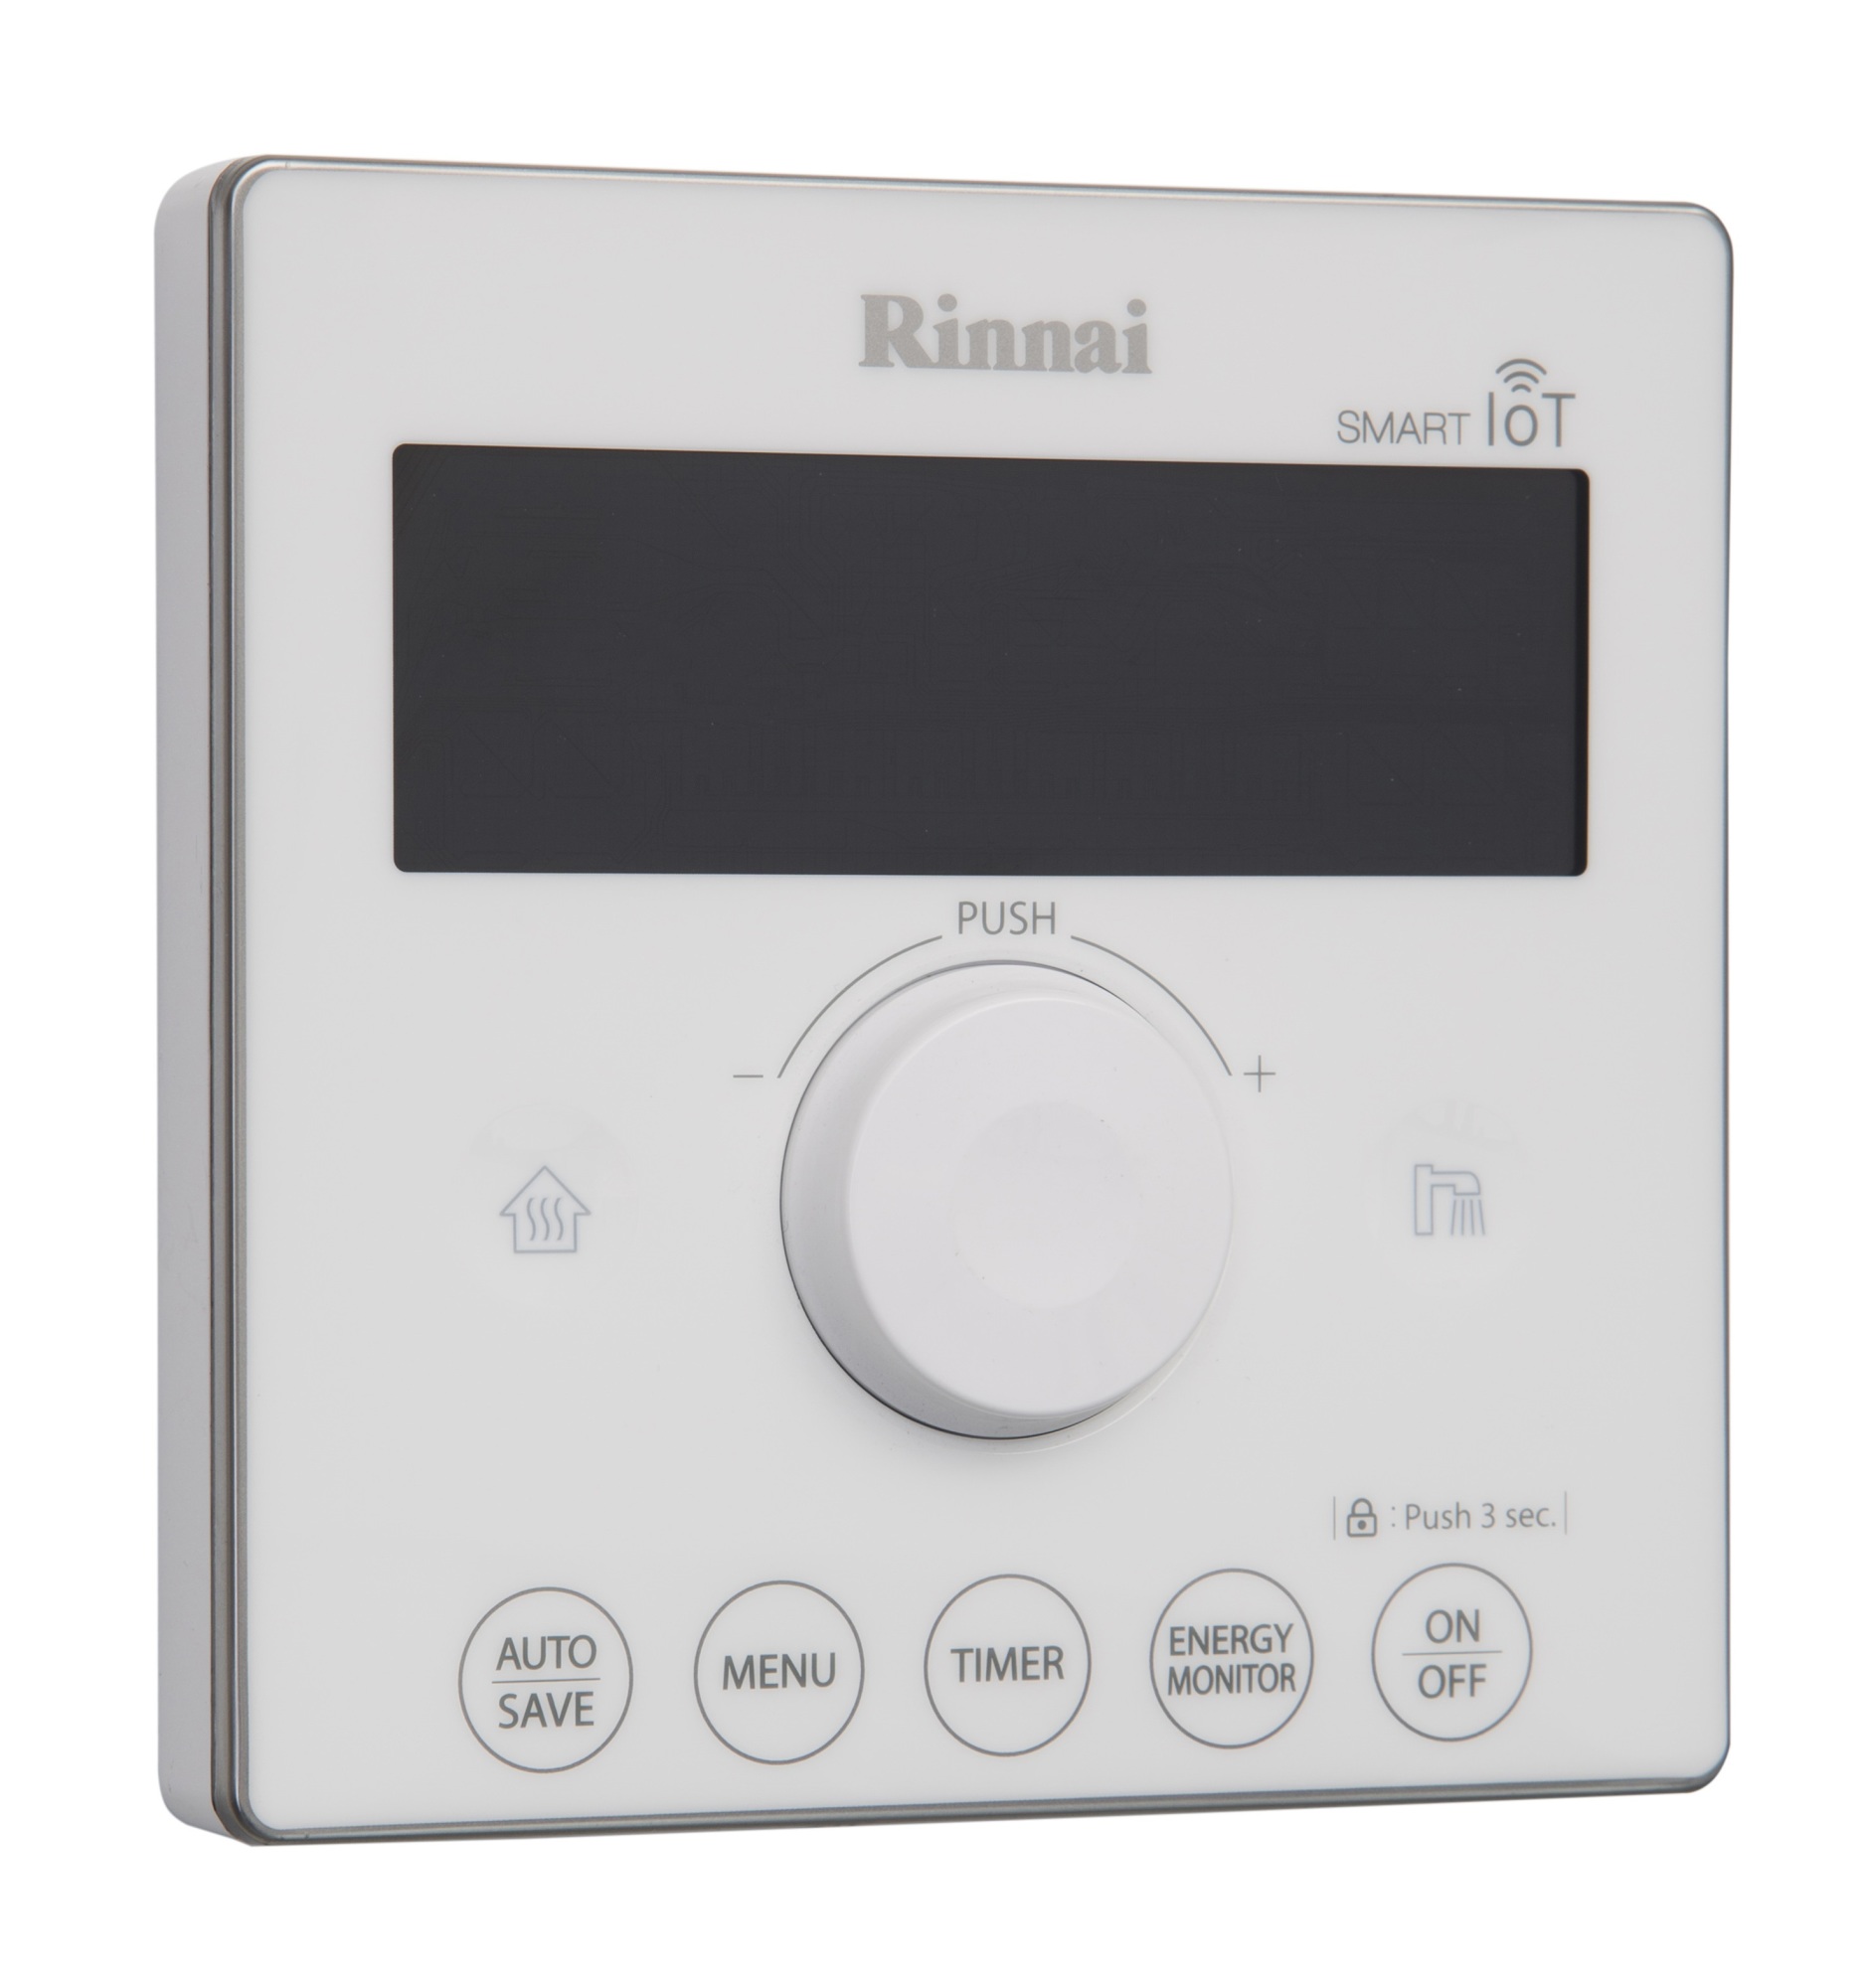 Rinnai has developed additional ‘SMART’ controls